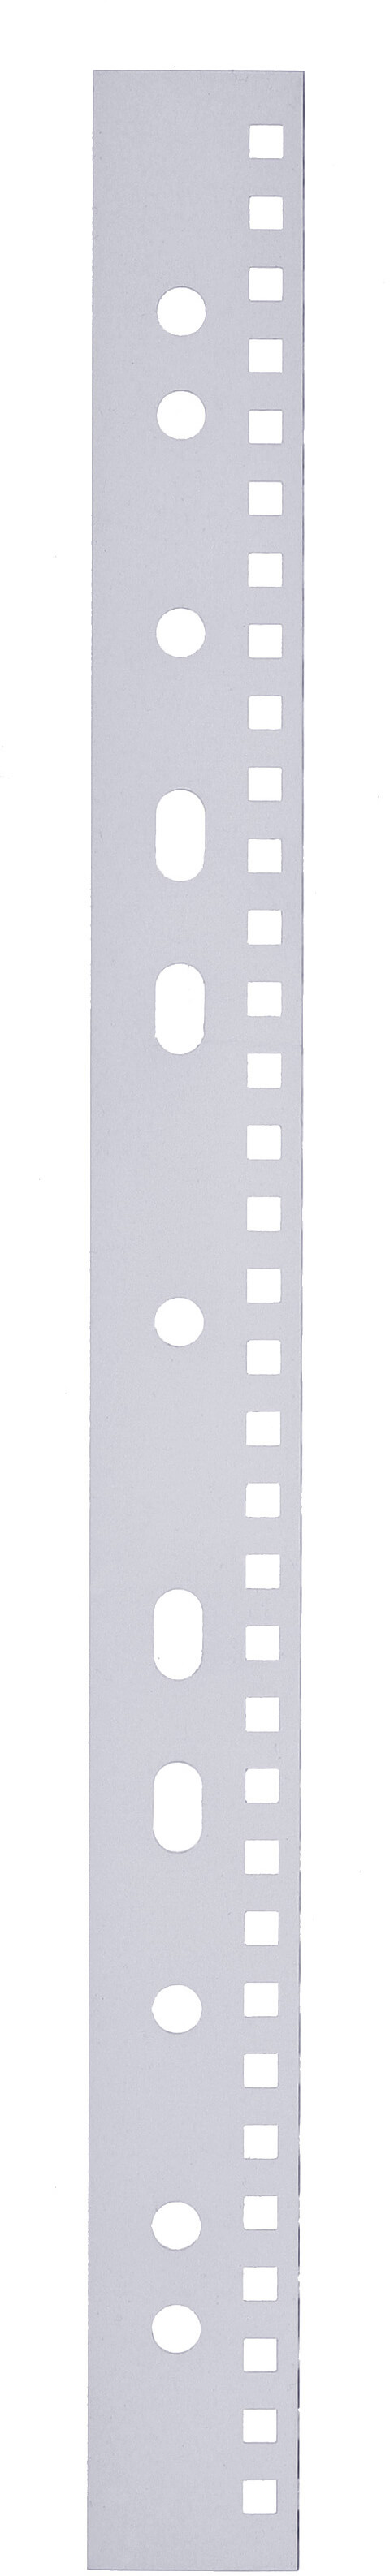 Abheftstreifen aus transparentem PVC 300 mic mit 4 fach-Lochung Draht 3:1 (100 Stück)